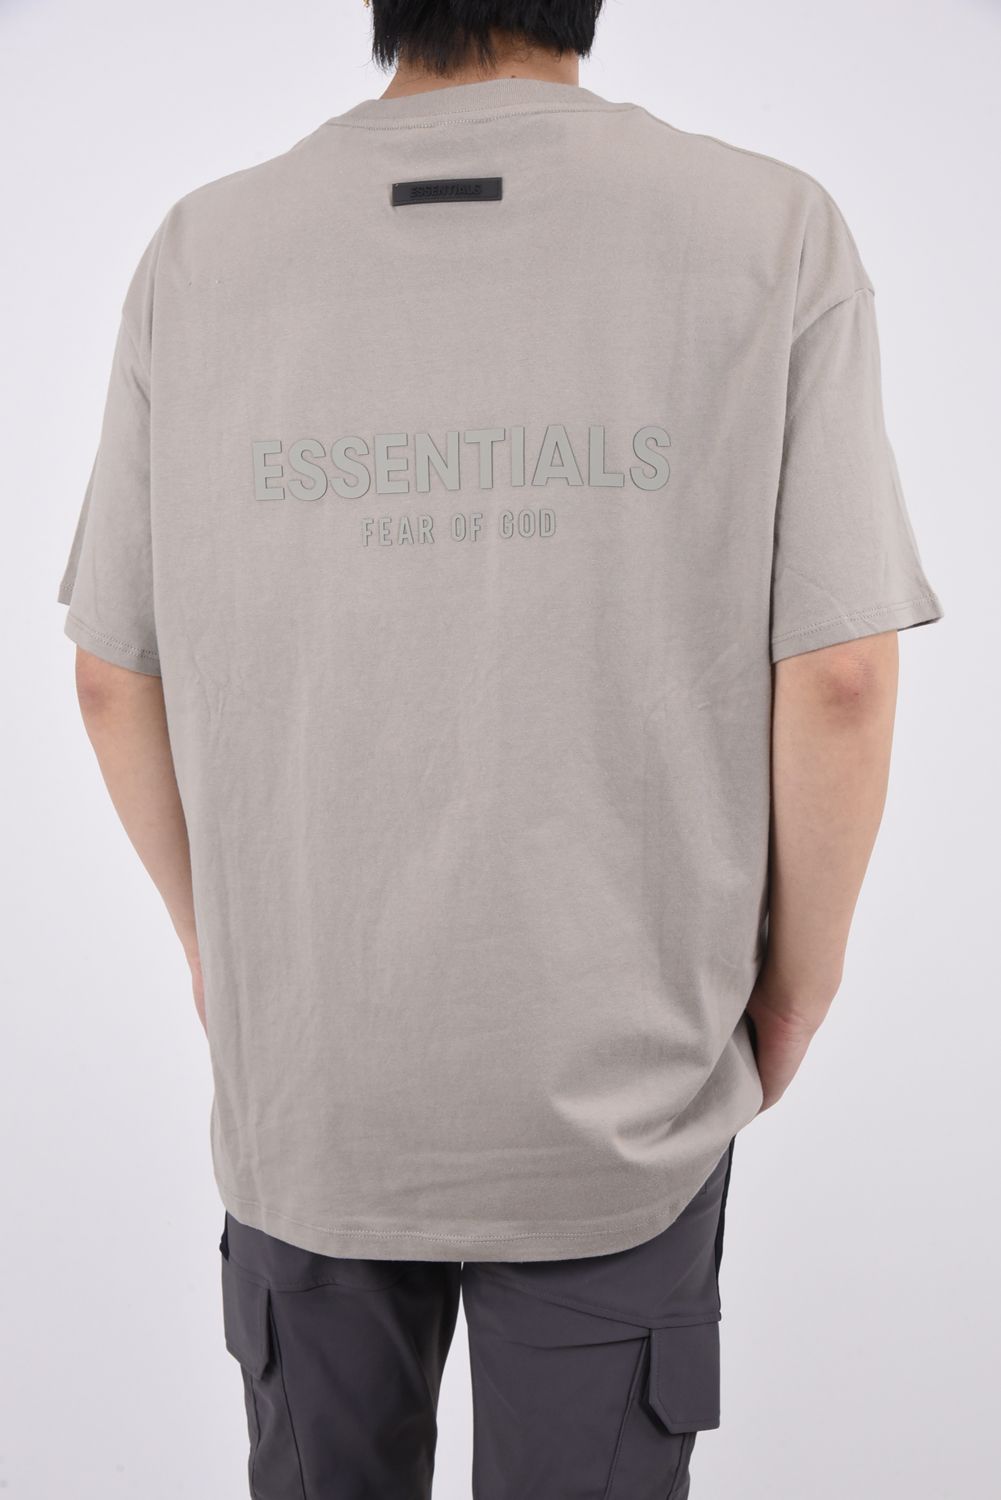 FOG ESSENTIALS - ESSENTIALS BACK LOGO T-Shirt / バックロゴ 半袖 T